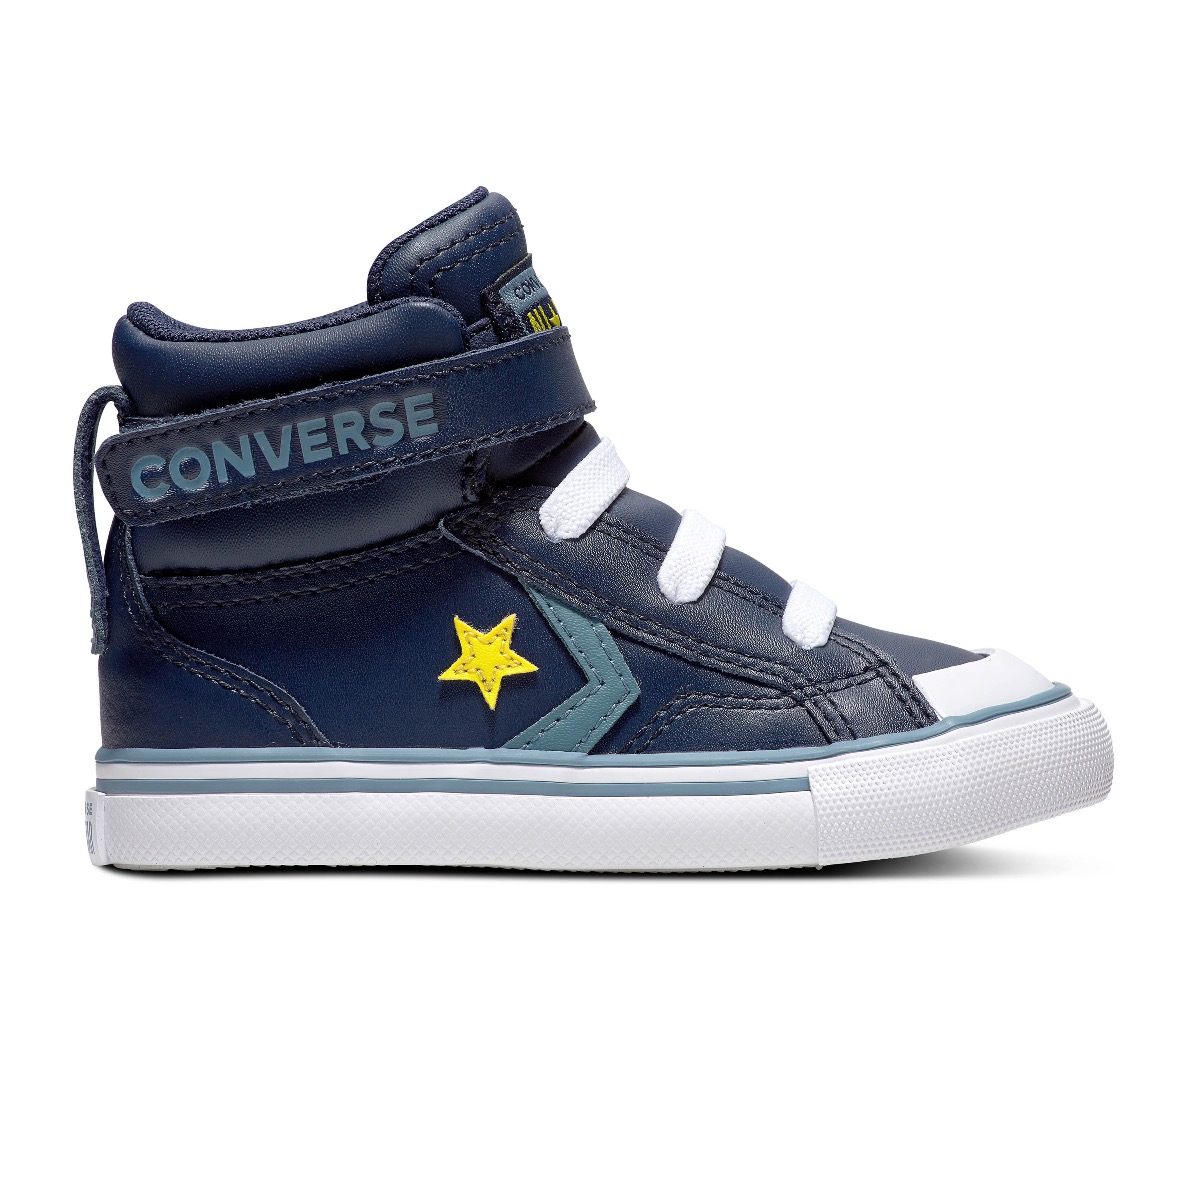 Converse All Star Pro Blaze Strap Hi sneakers blauw-wit